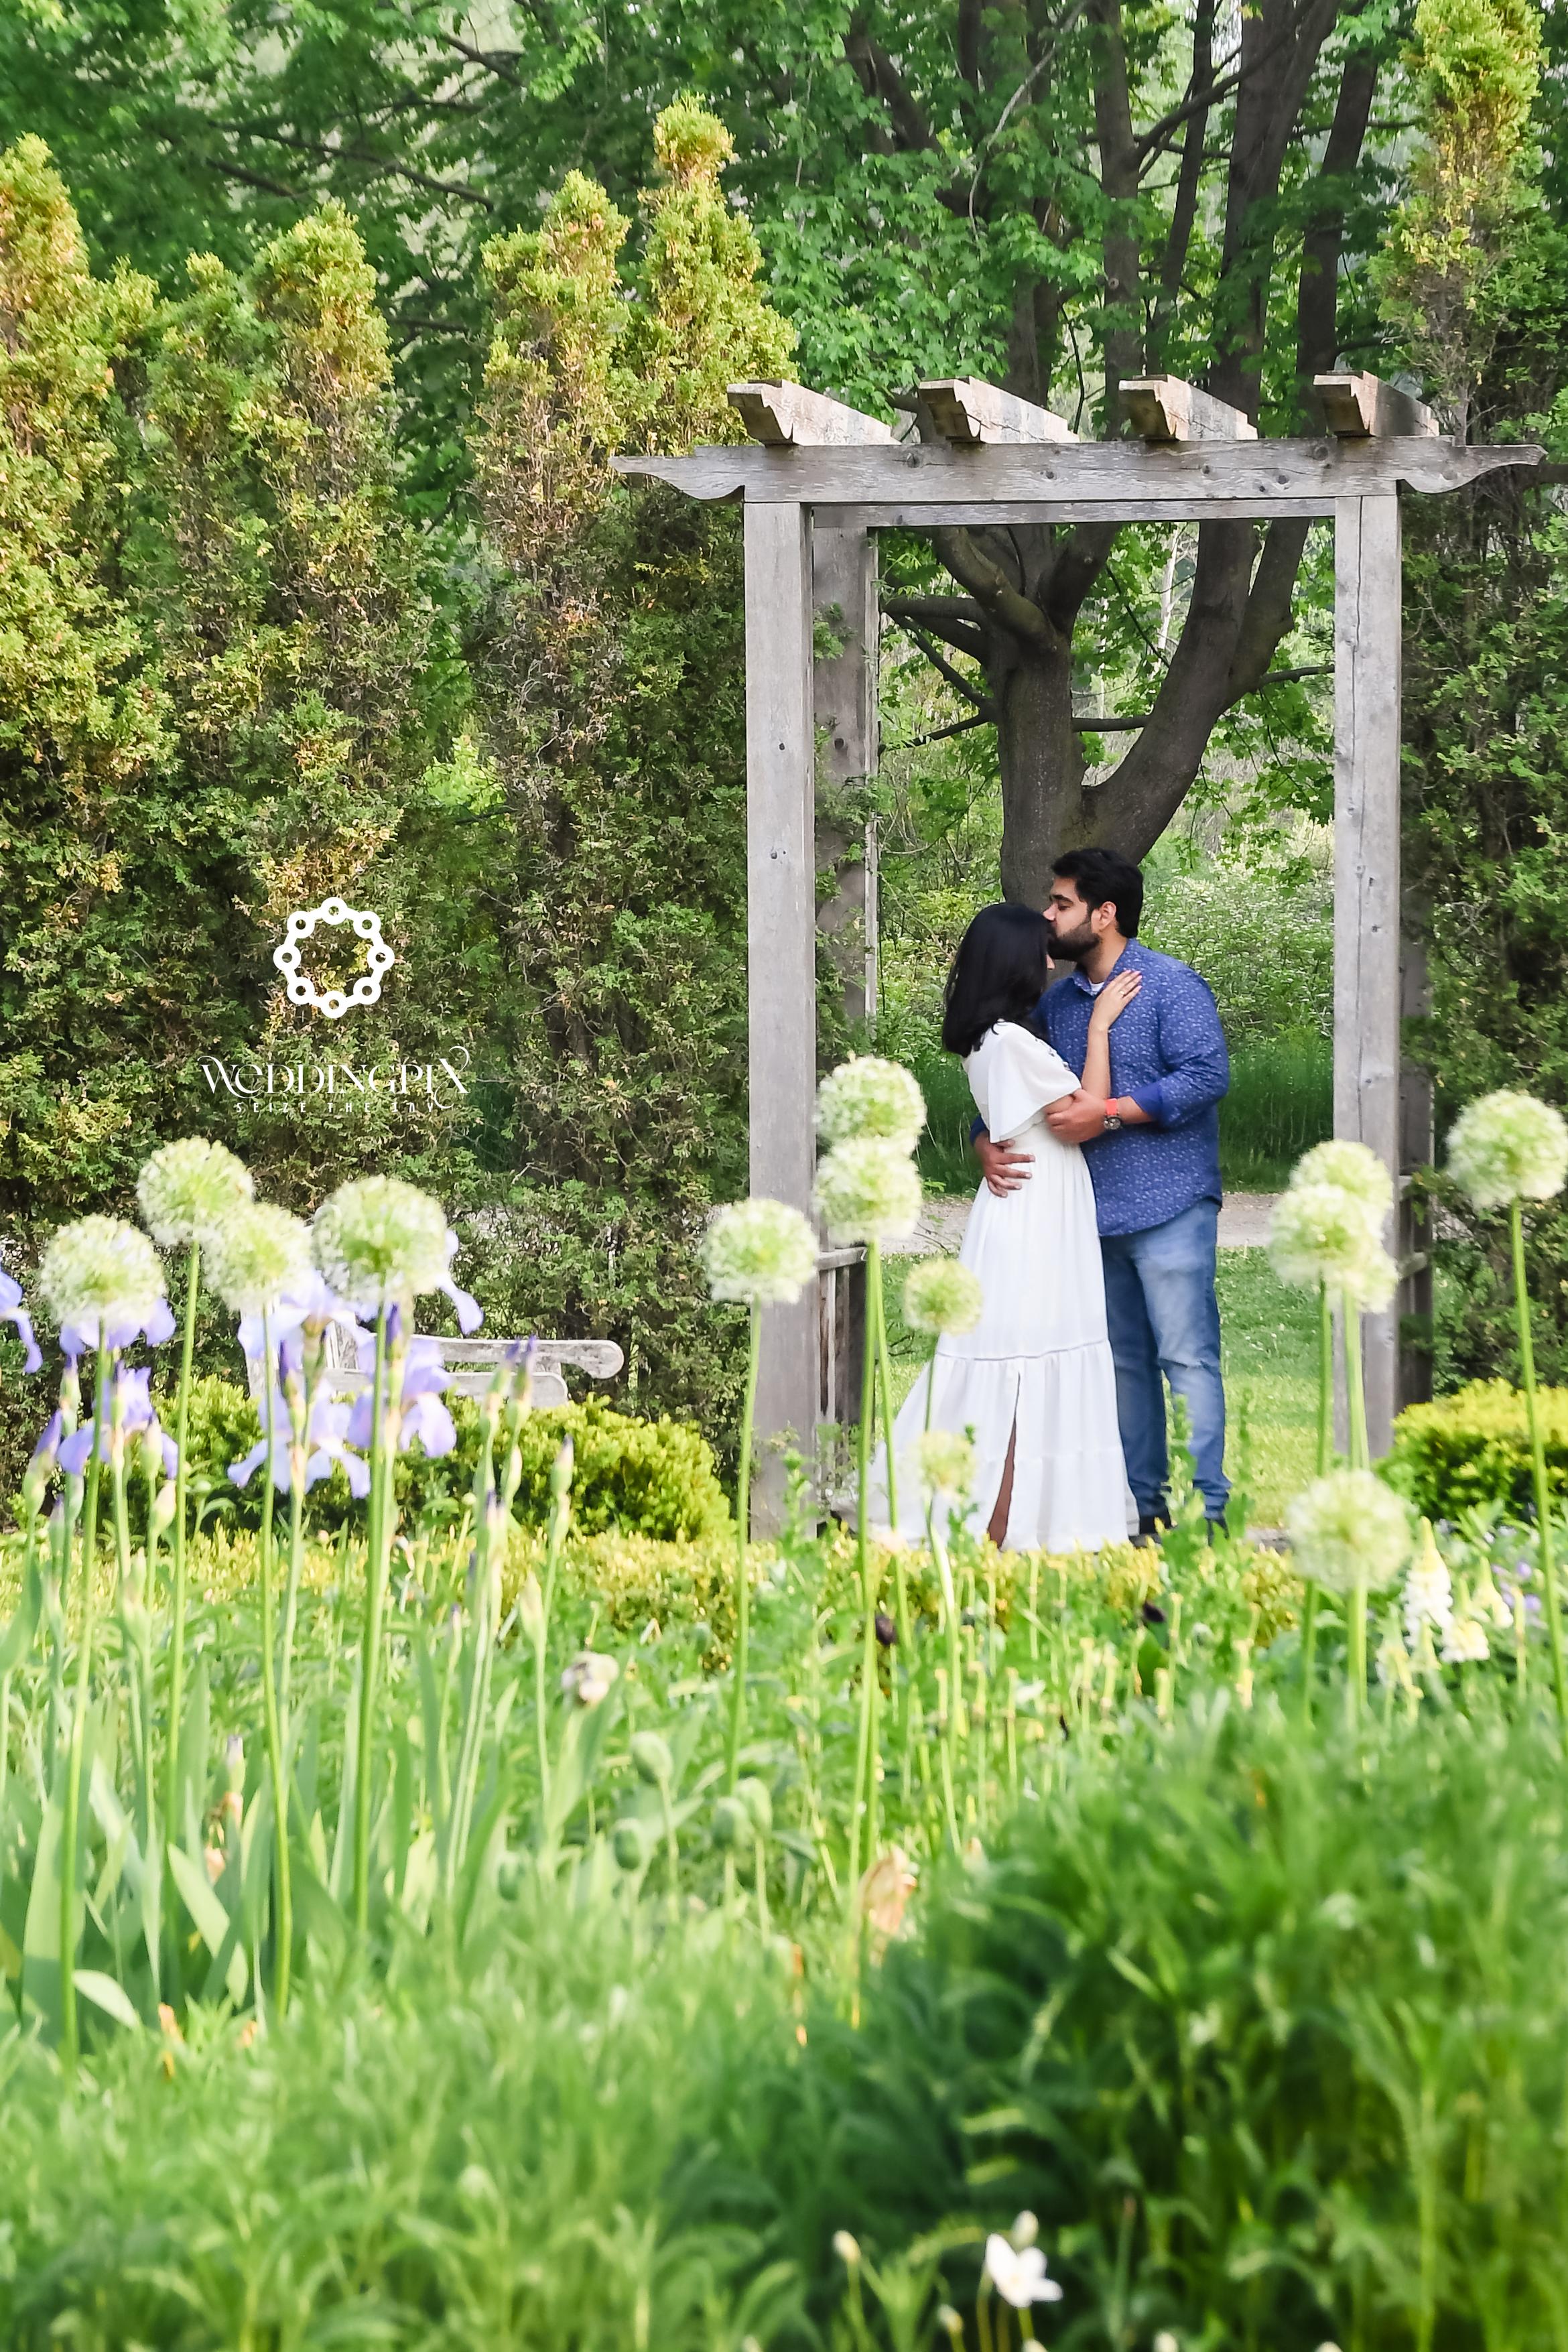 Engagement photo shoot in beautiful flower garden.